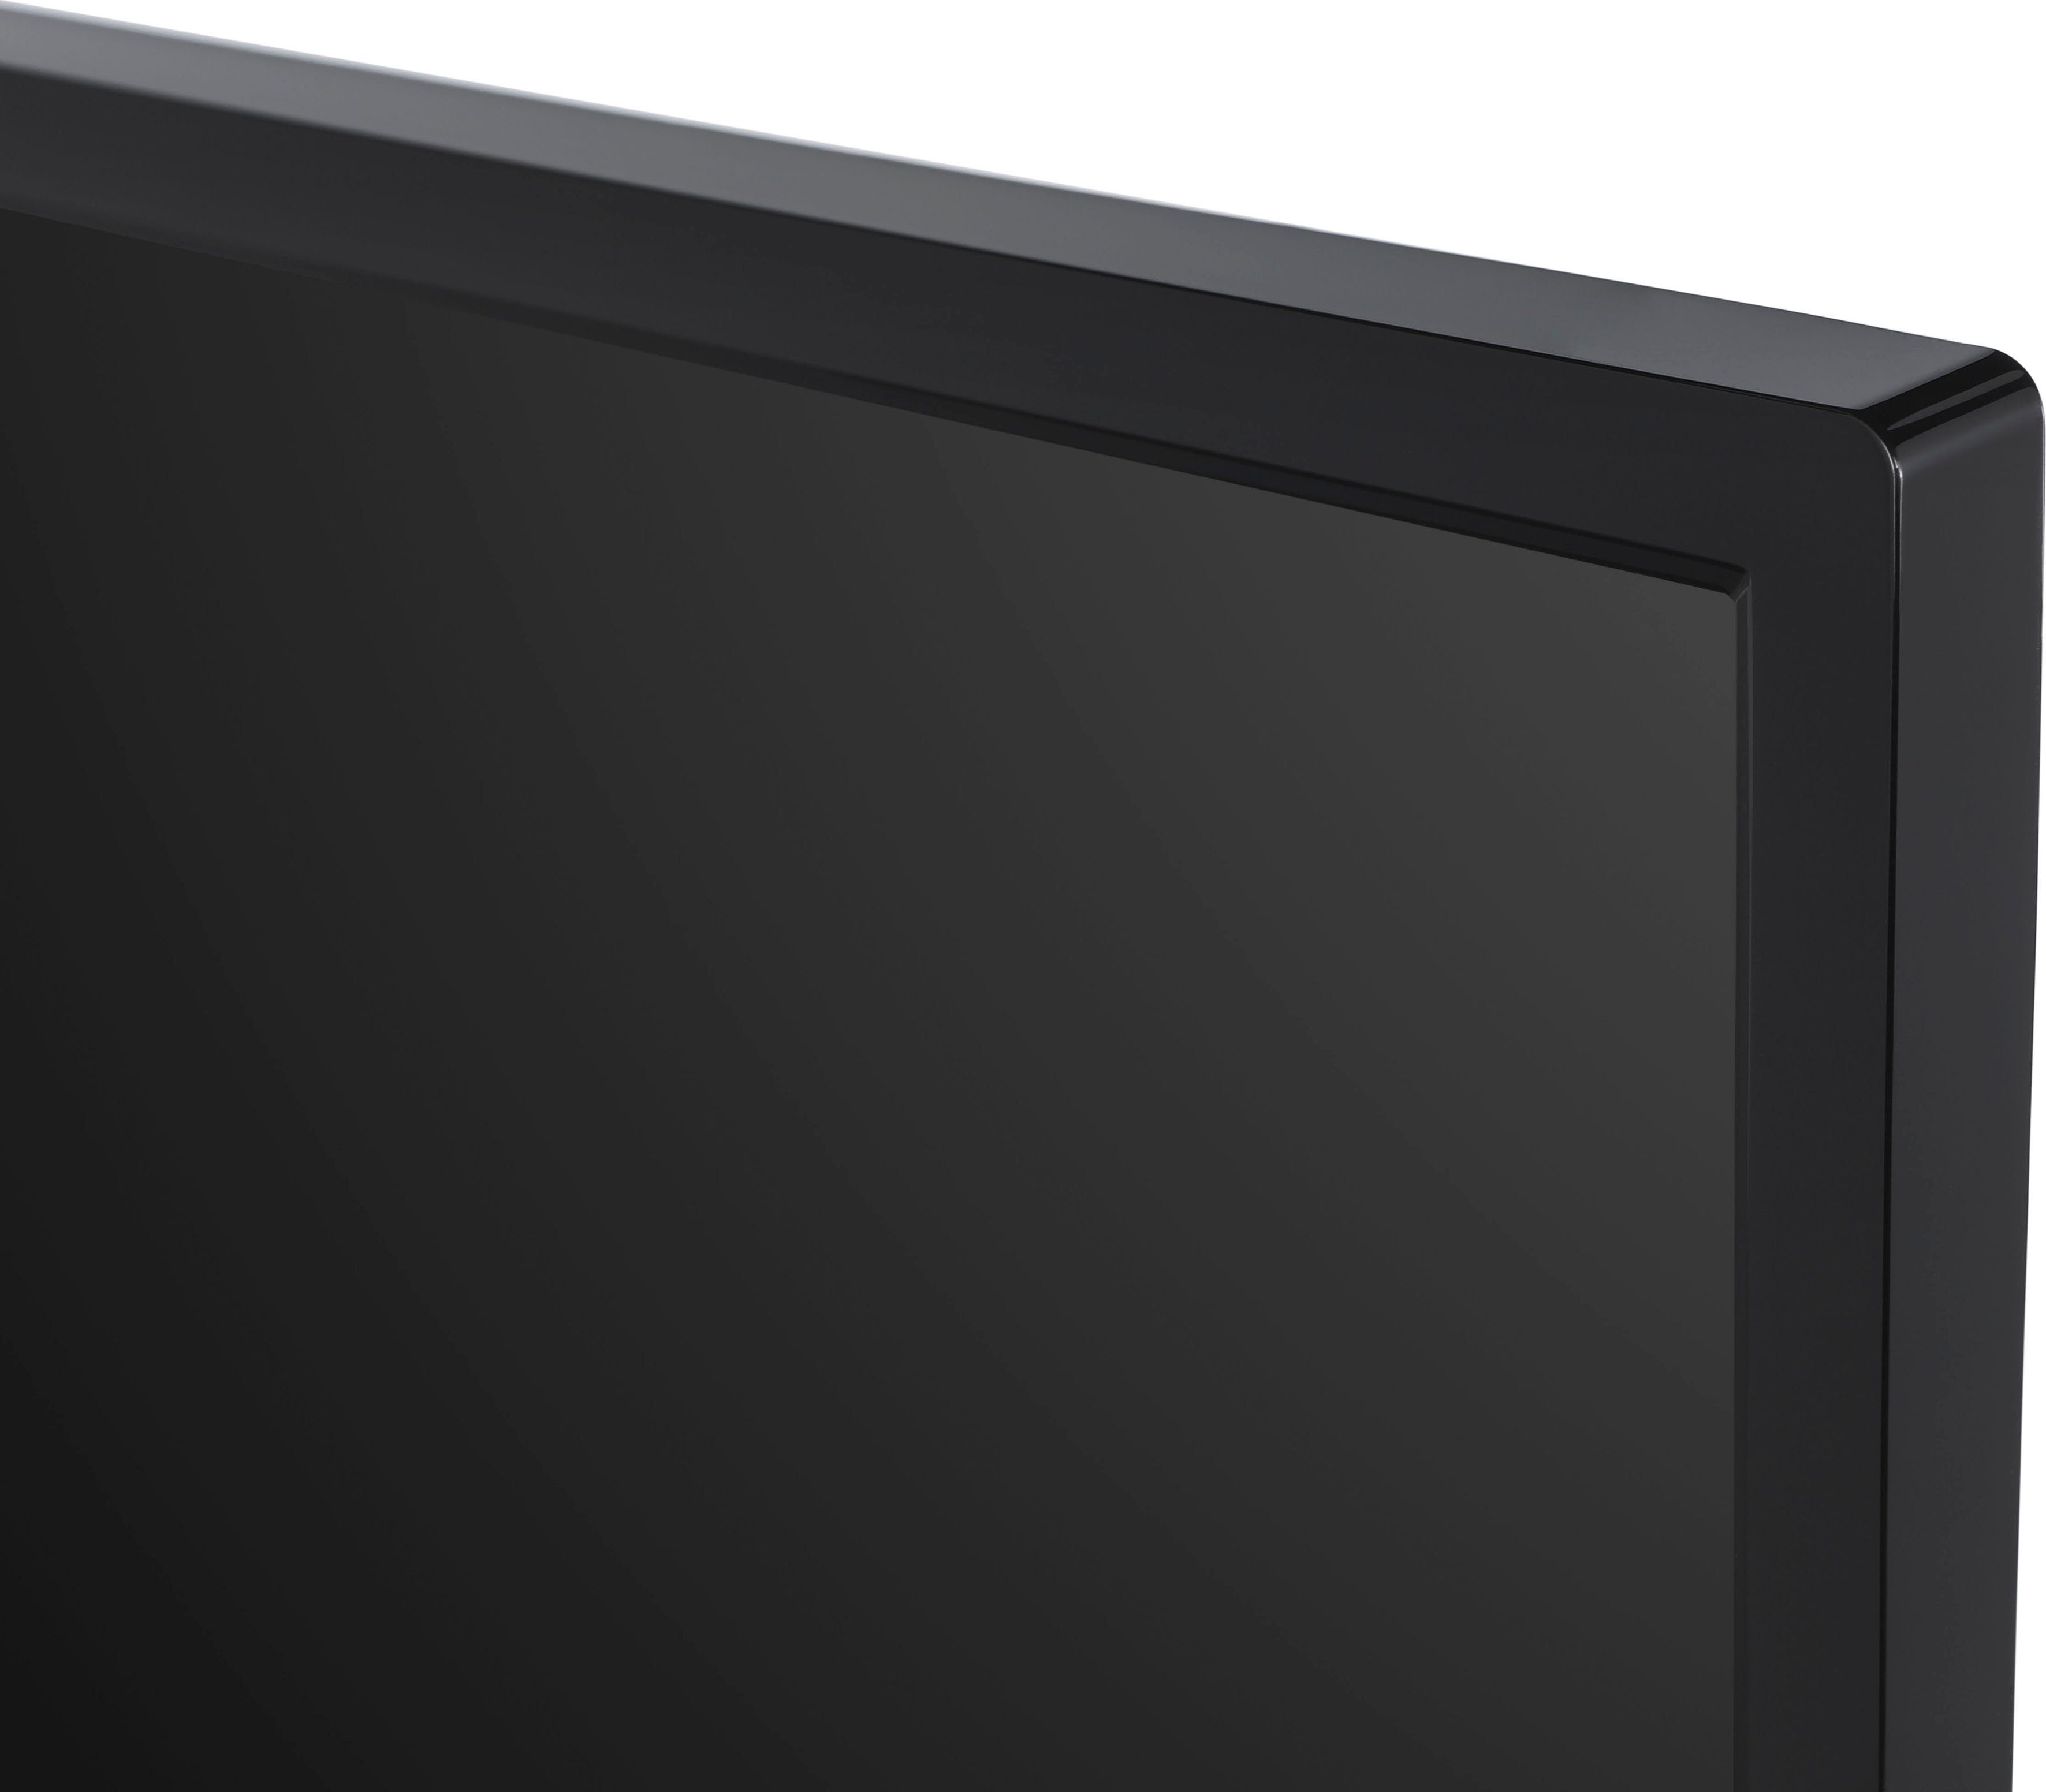 Toshiba 32LK3C63DAA/2 LED-Fernseher (80 cm/32 Smart-TV) HD, Full Zoll